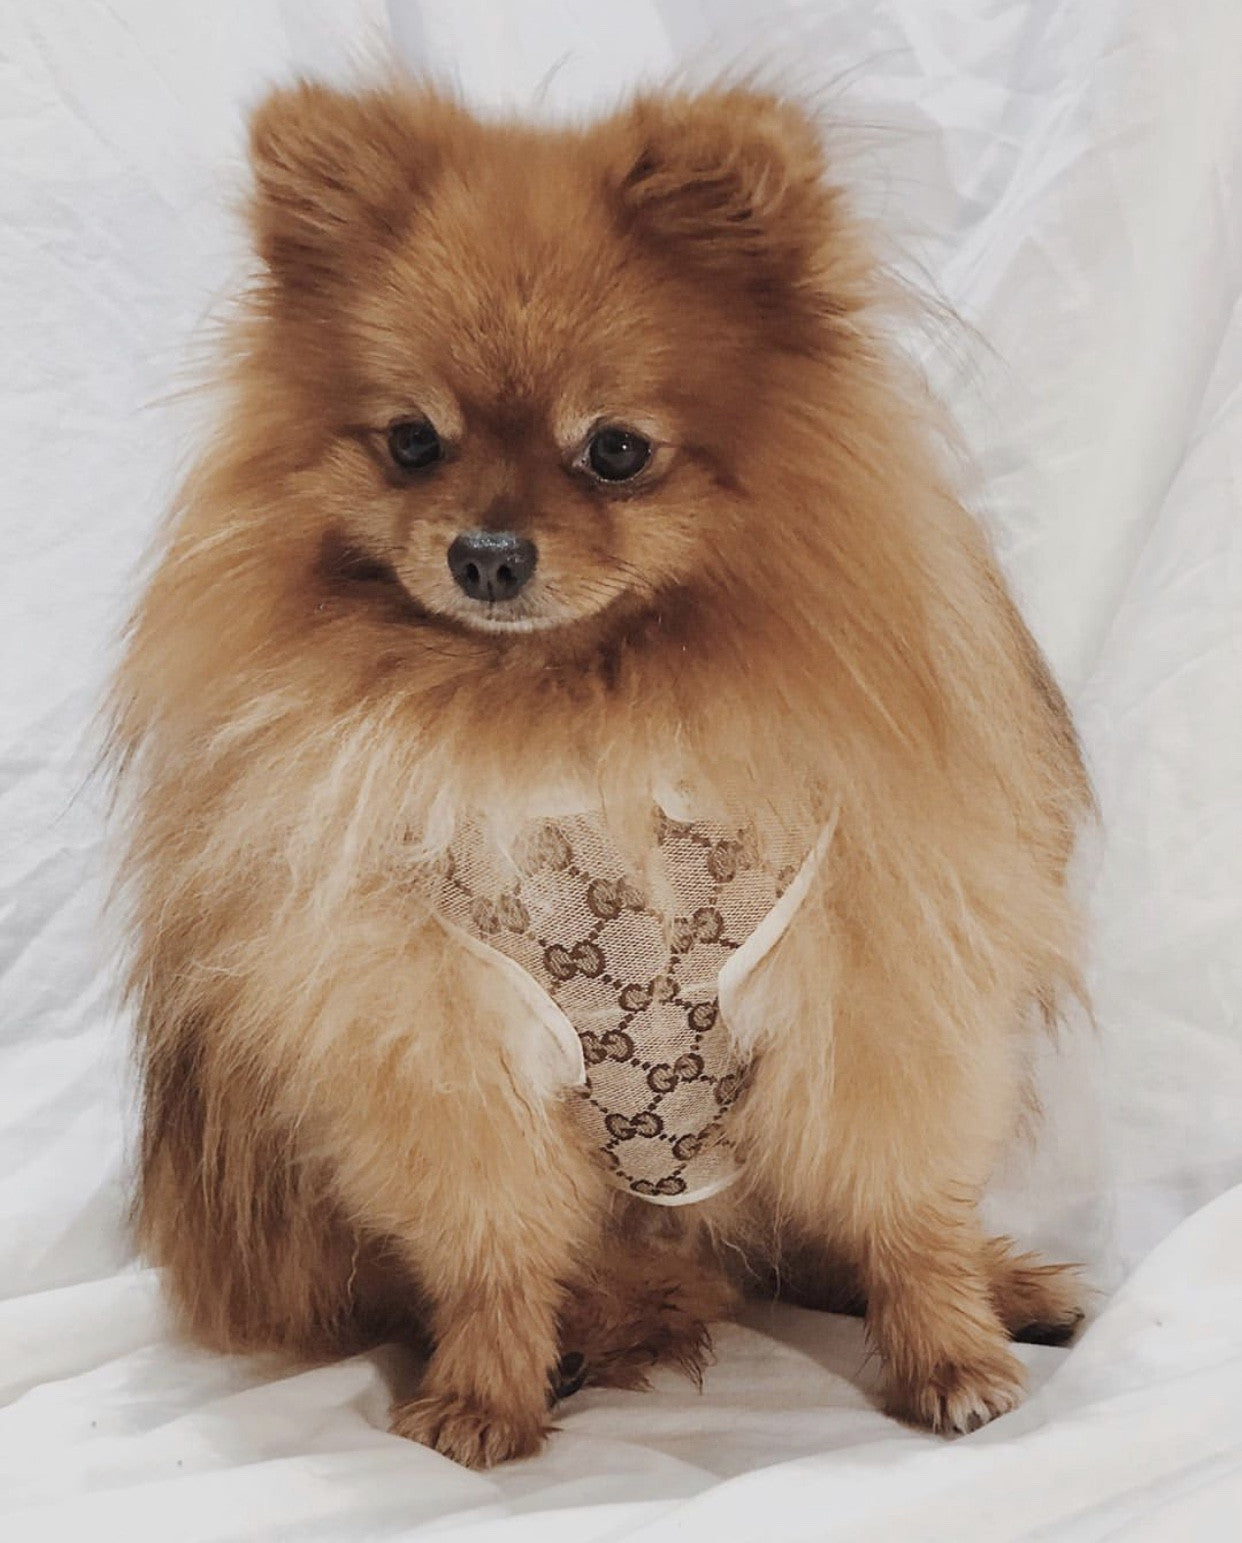 Gucci Dog Leash & Harness Set – Purrfect Puppy